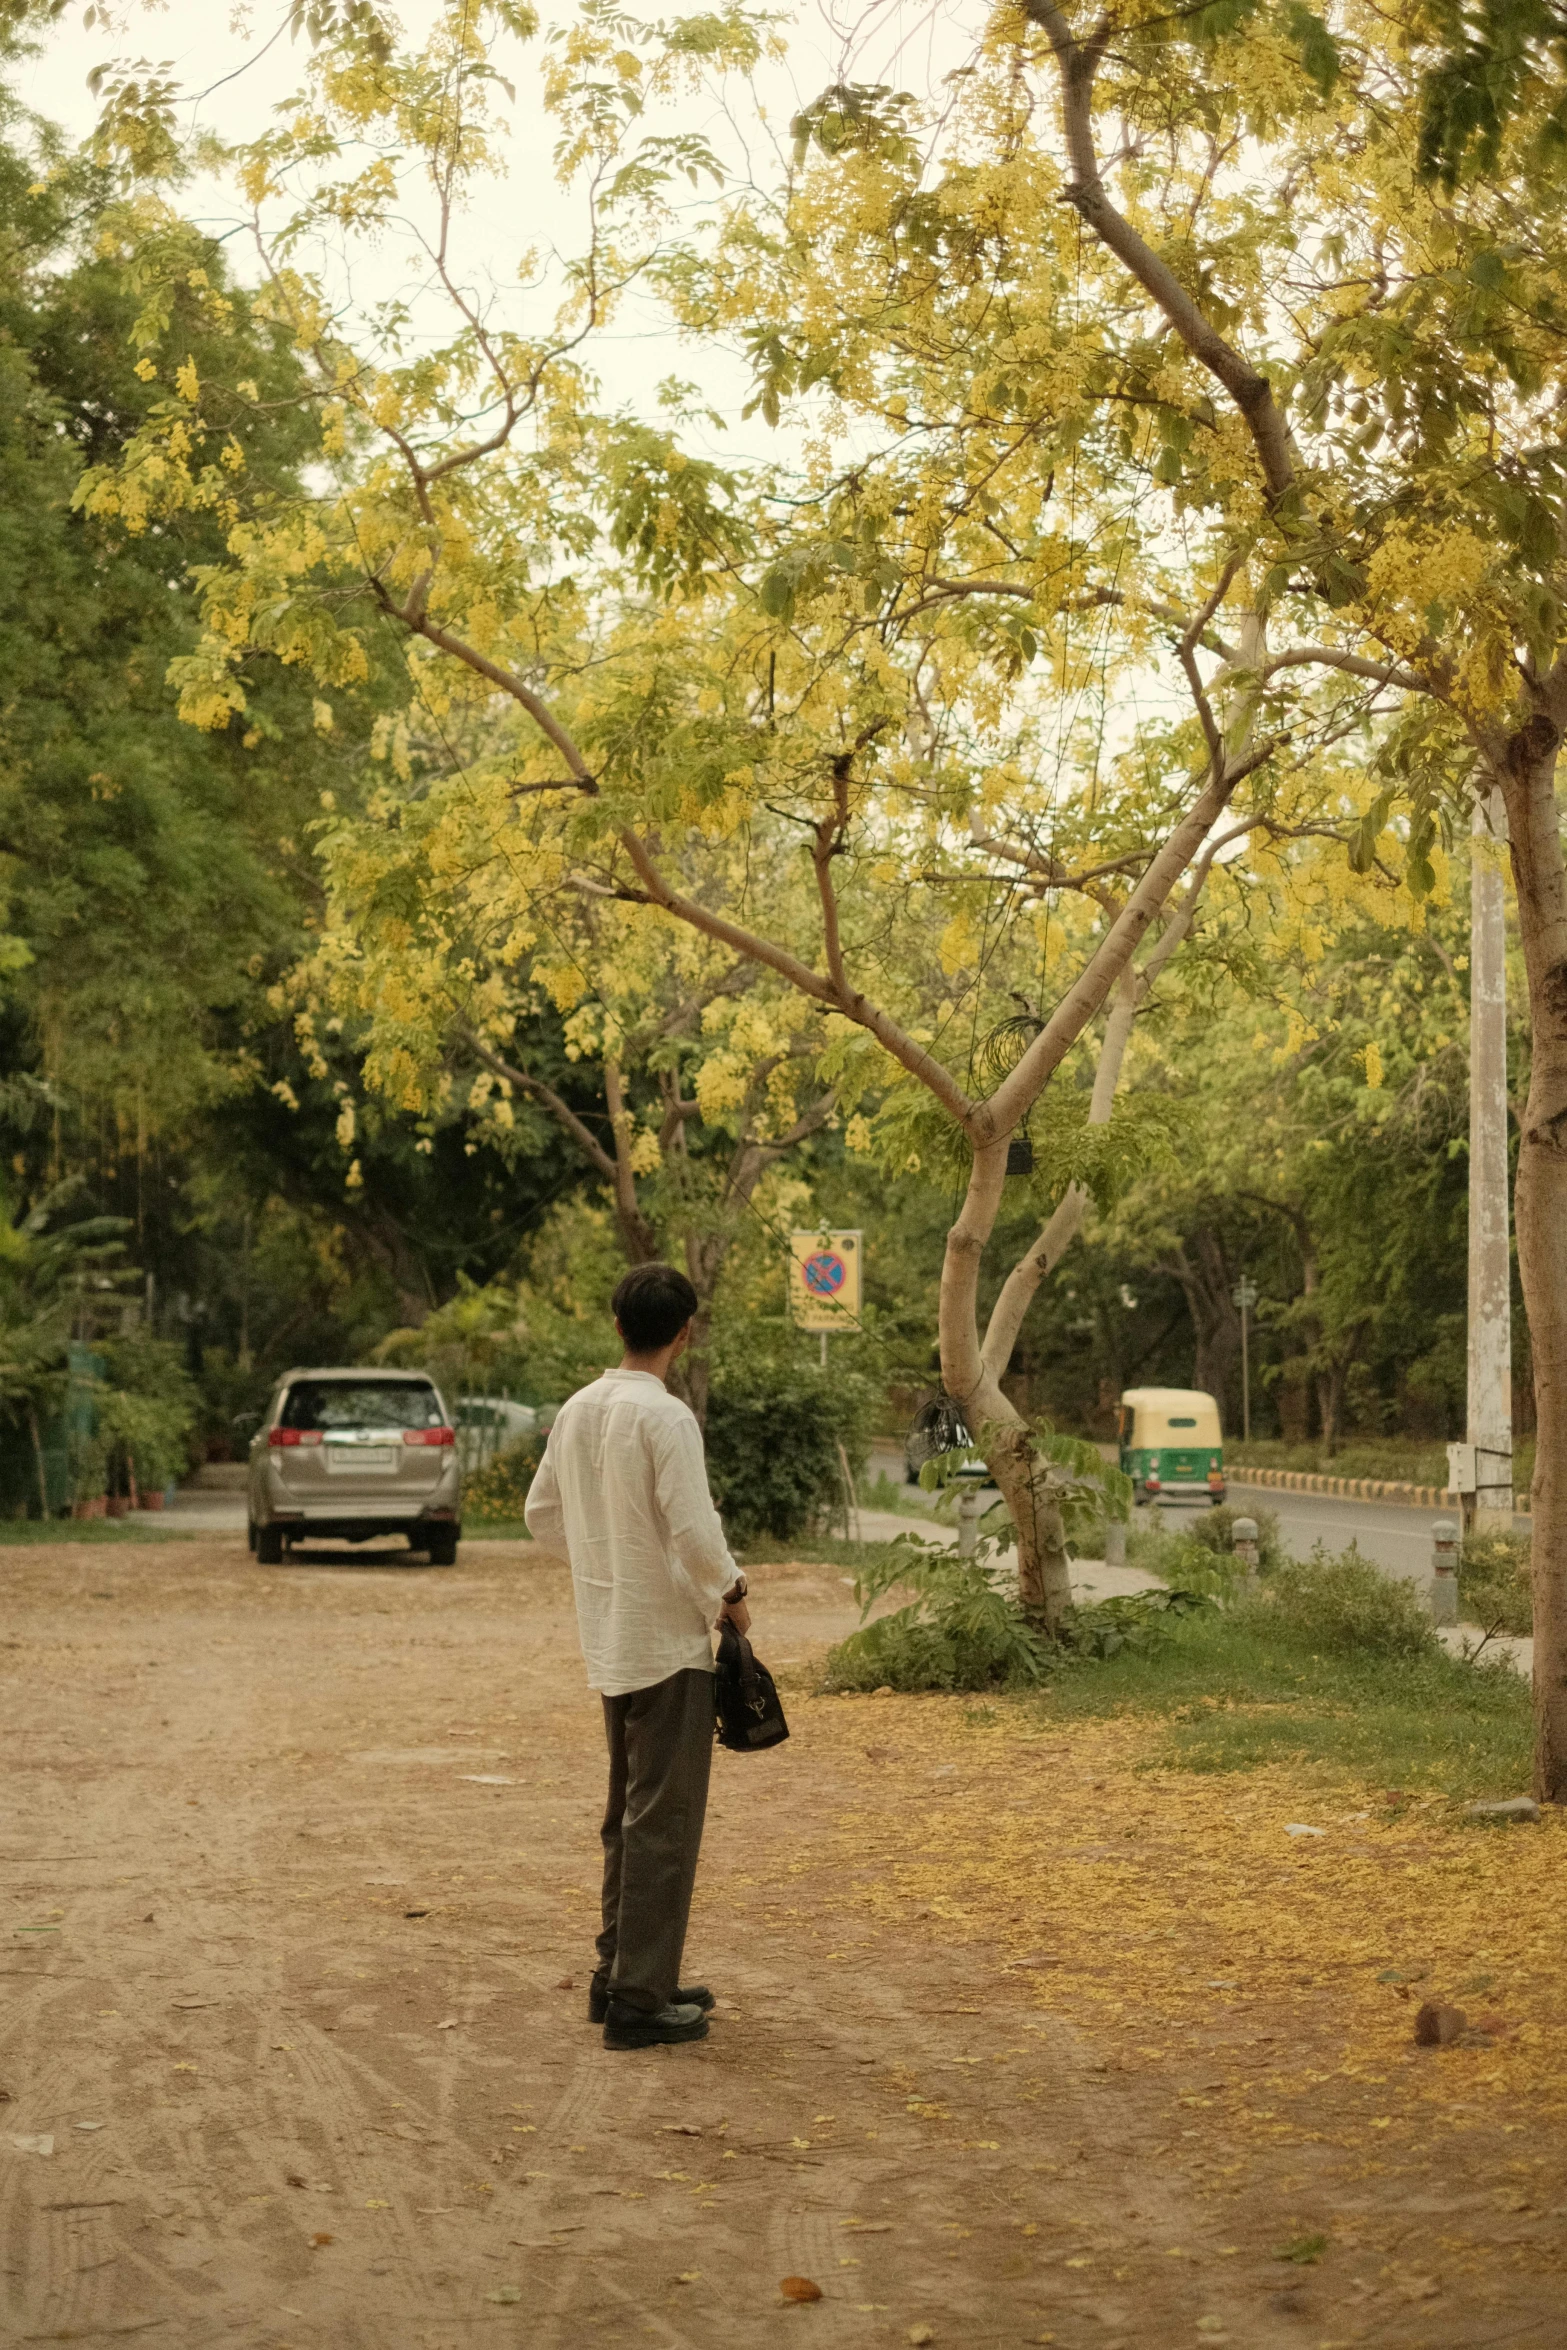 a man walking down the road toward a parked car